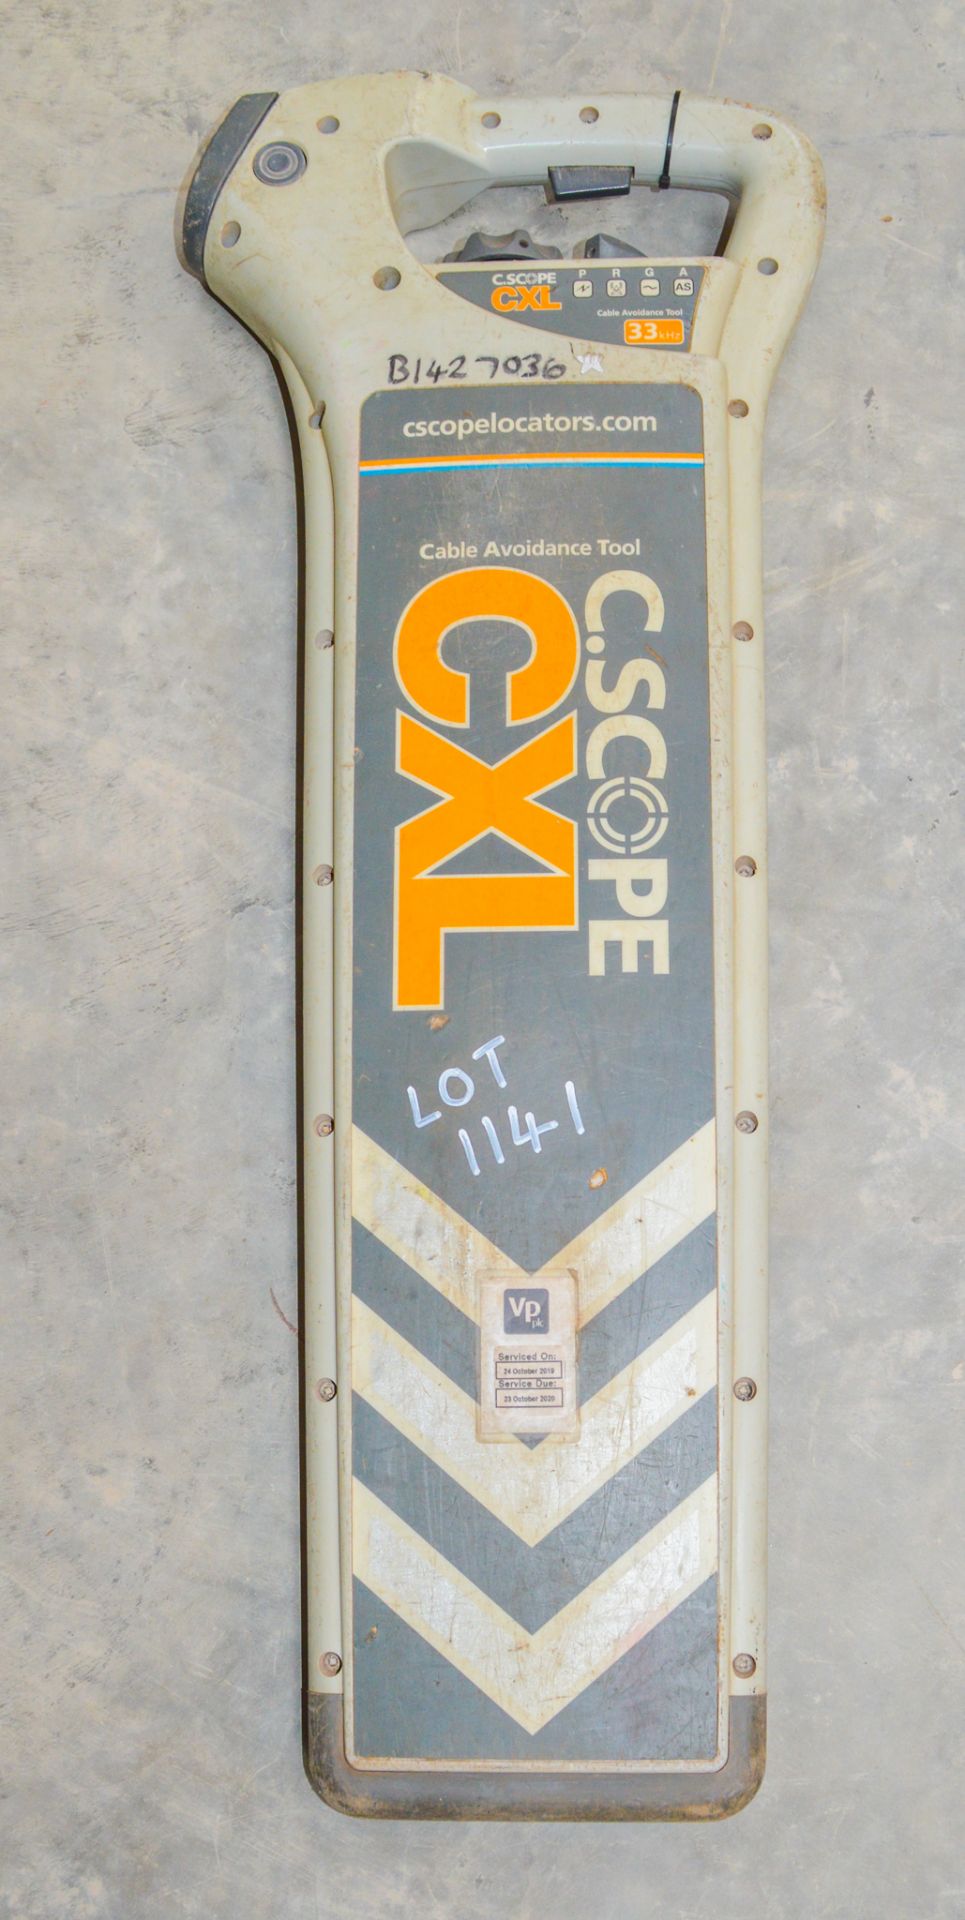 C-Scope CXL cable avoidance tool B1427036